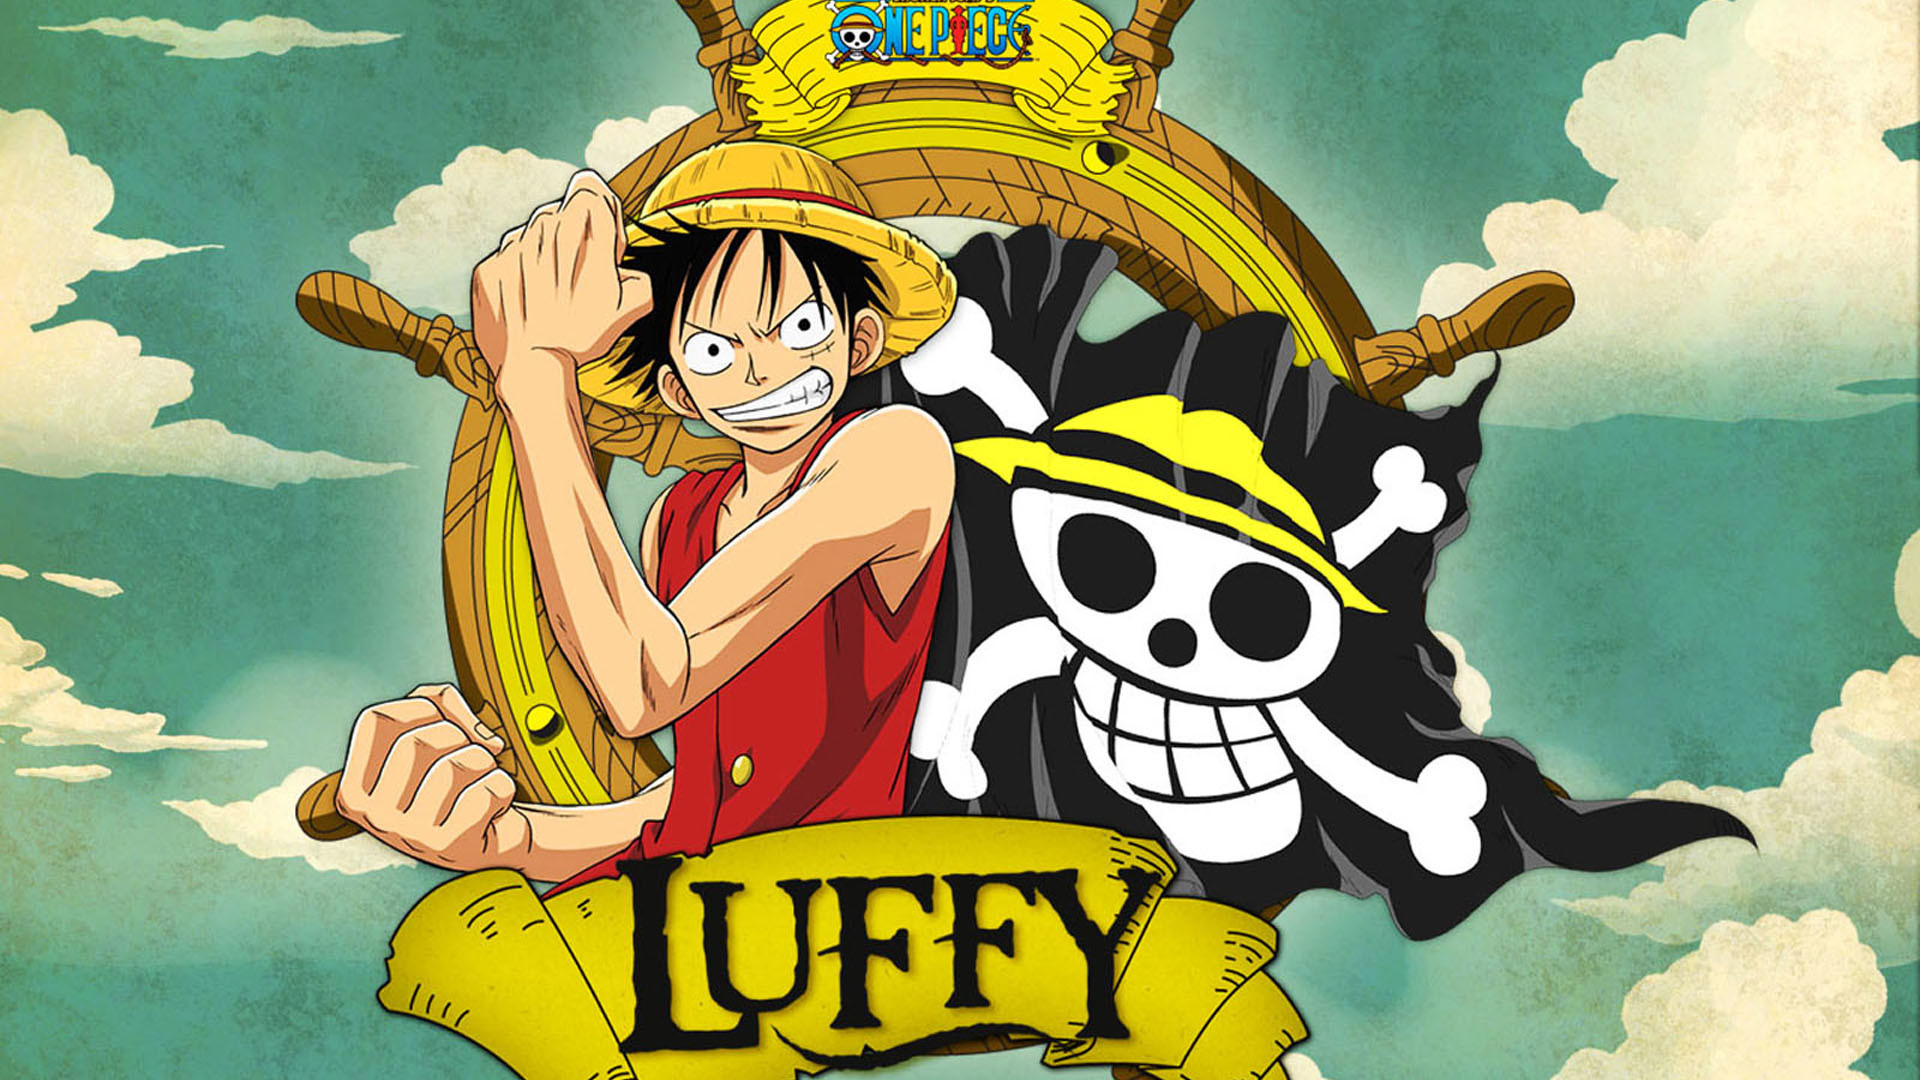 43 Gambar Keren Hd One Piece Gratis